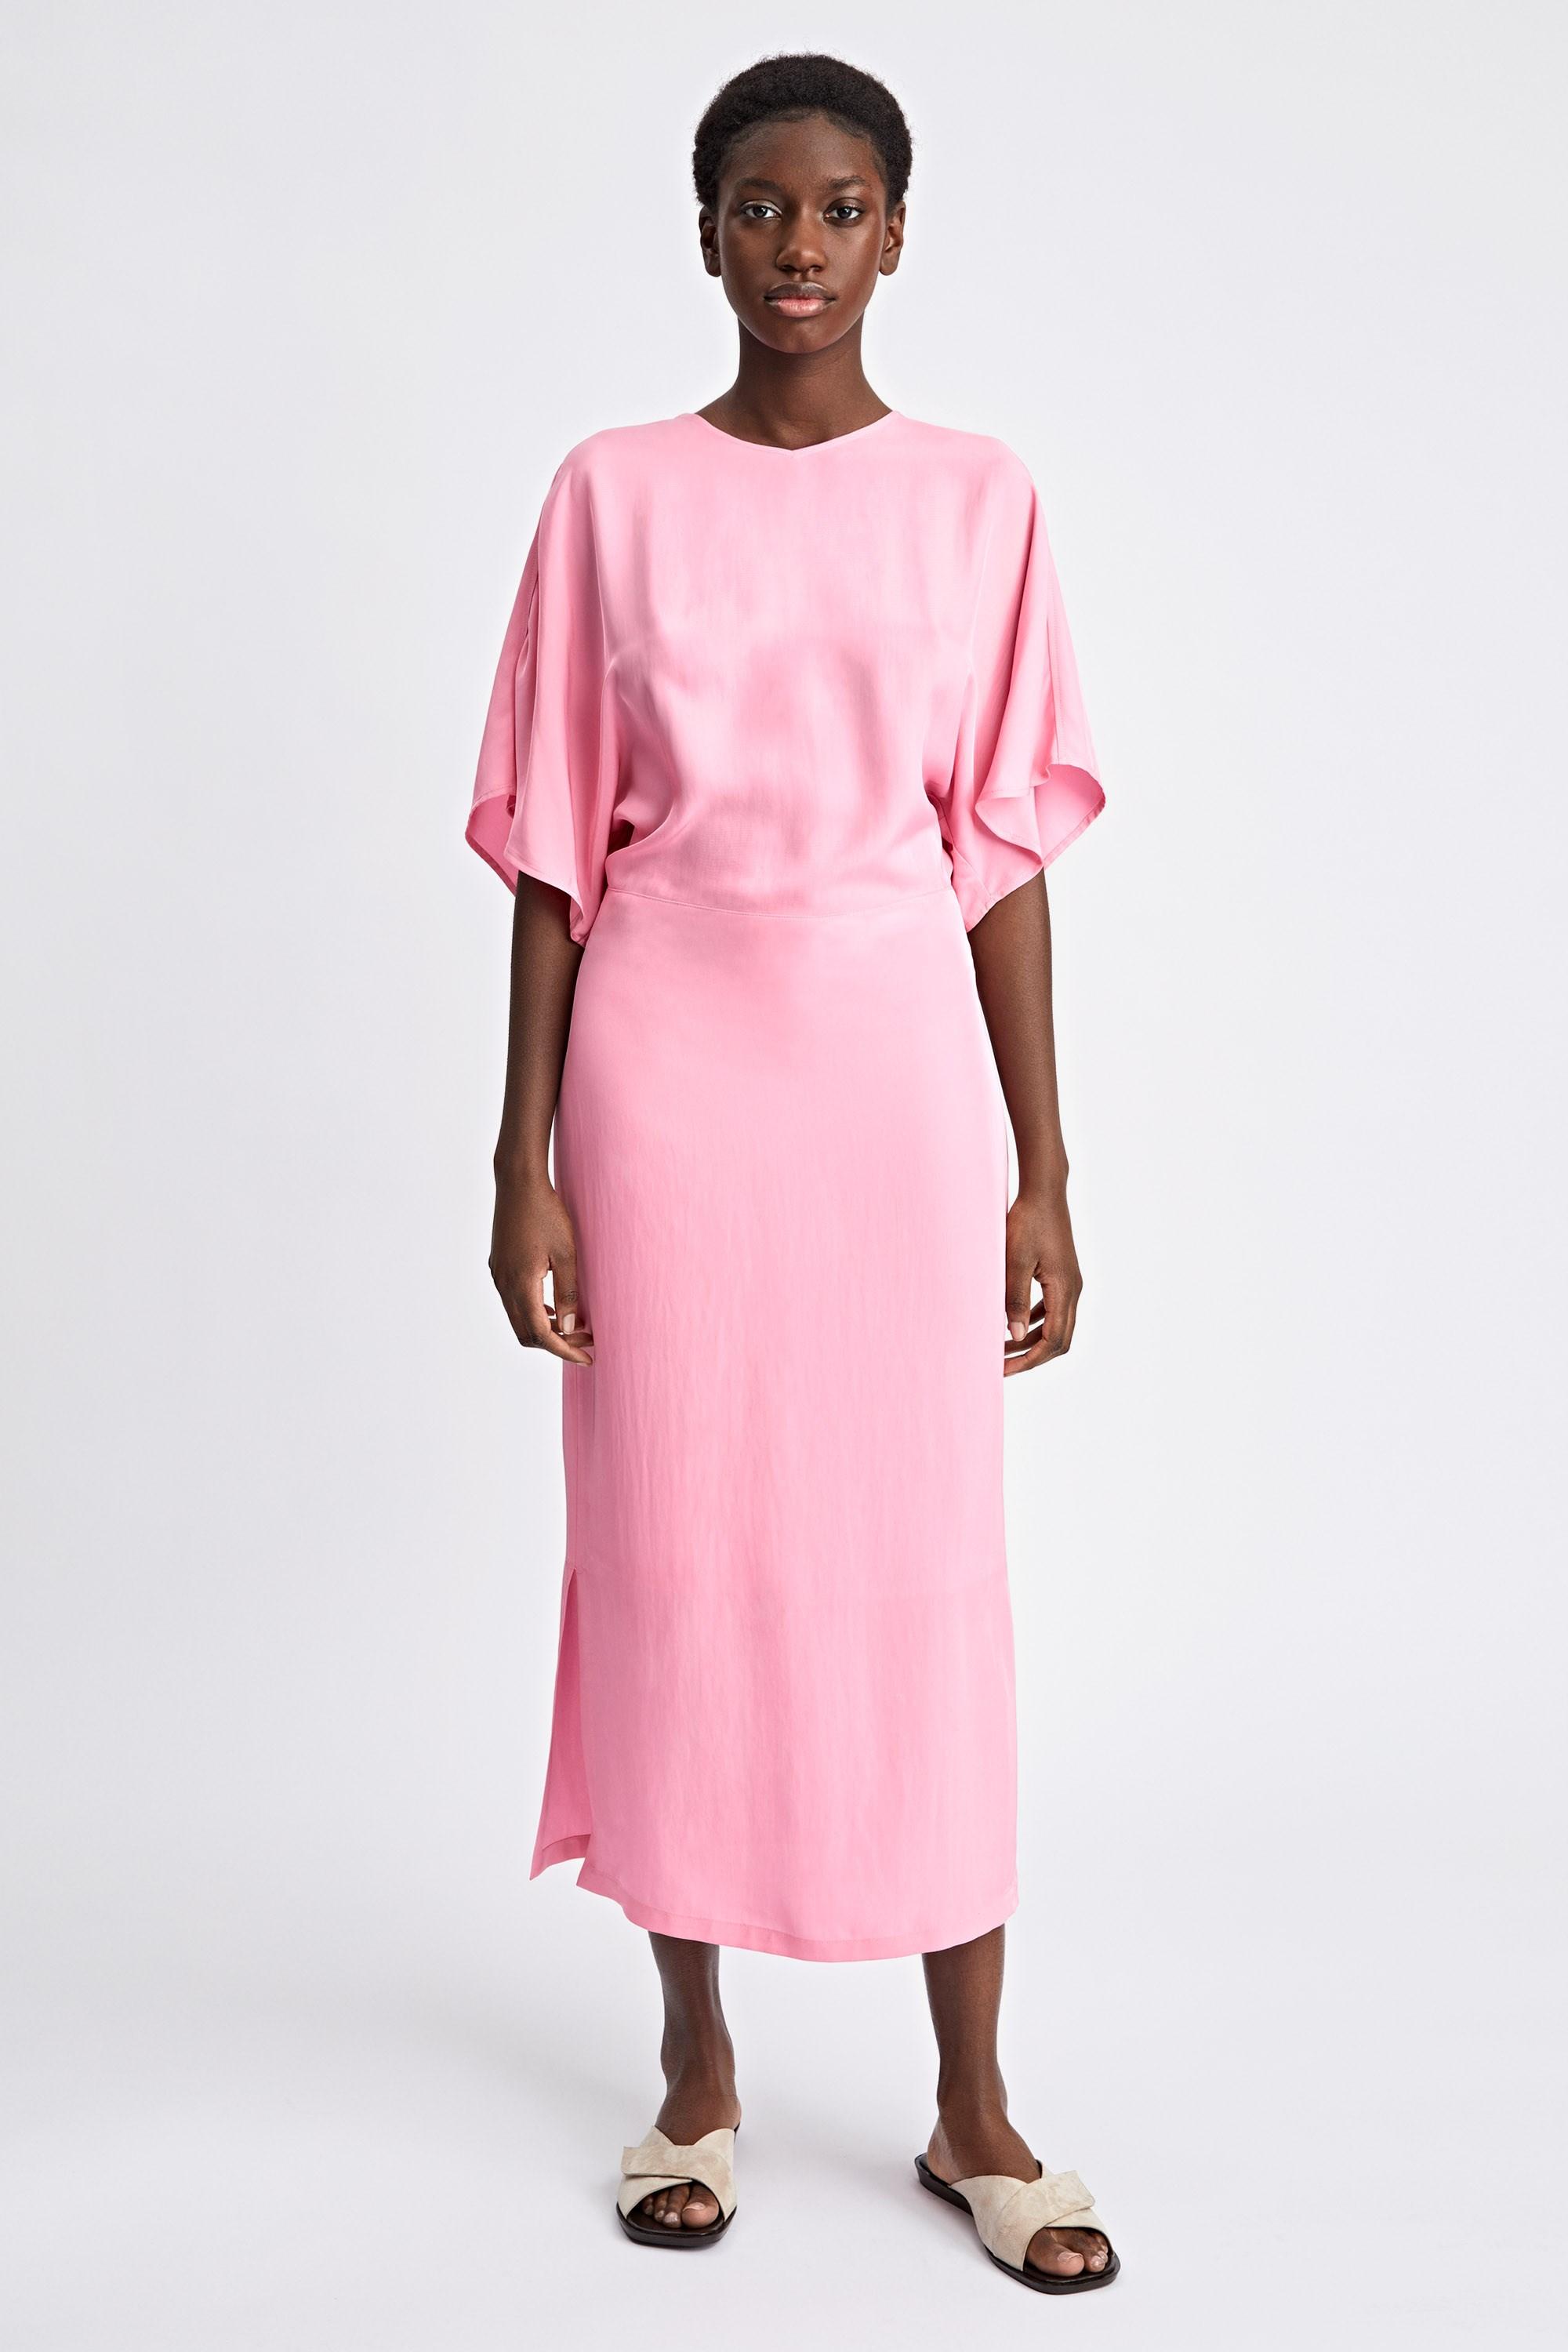 Filippa K Kimono Sleeve Dress in Pink - Lyst